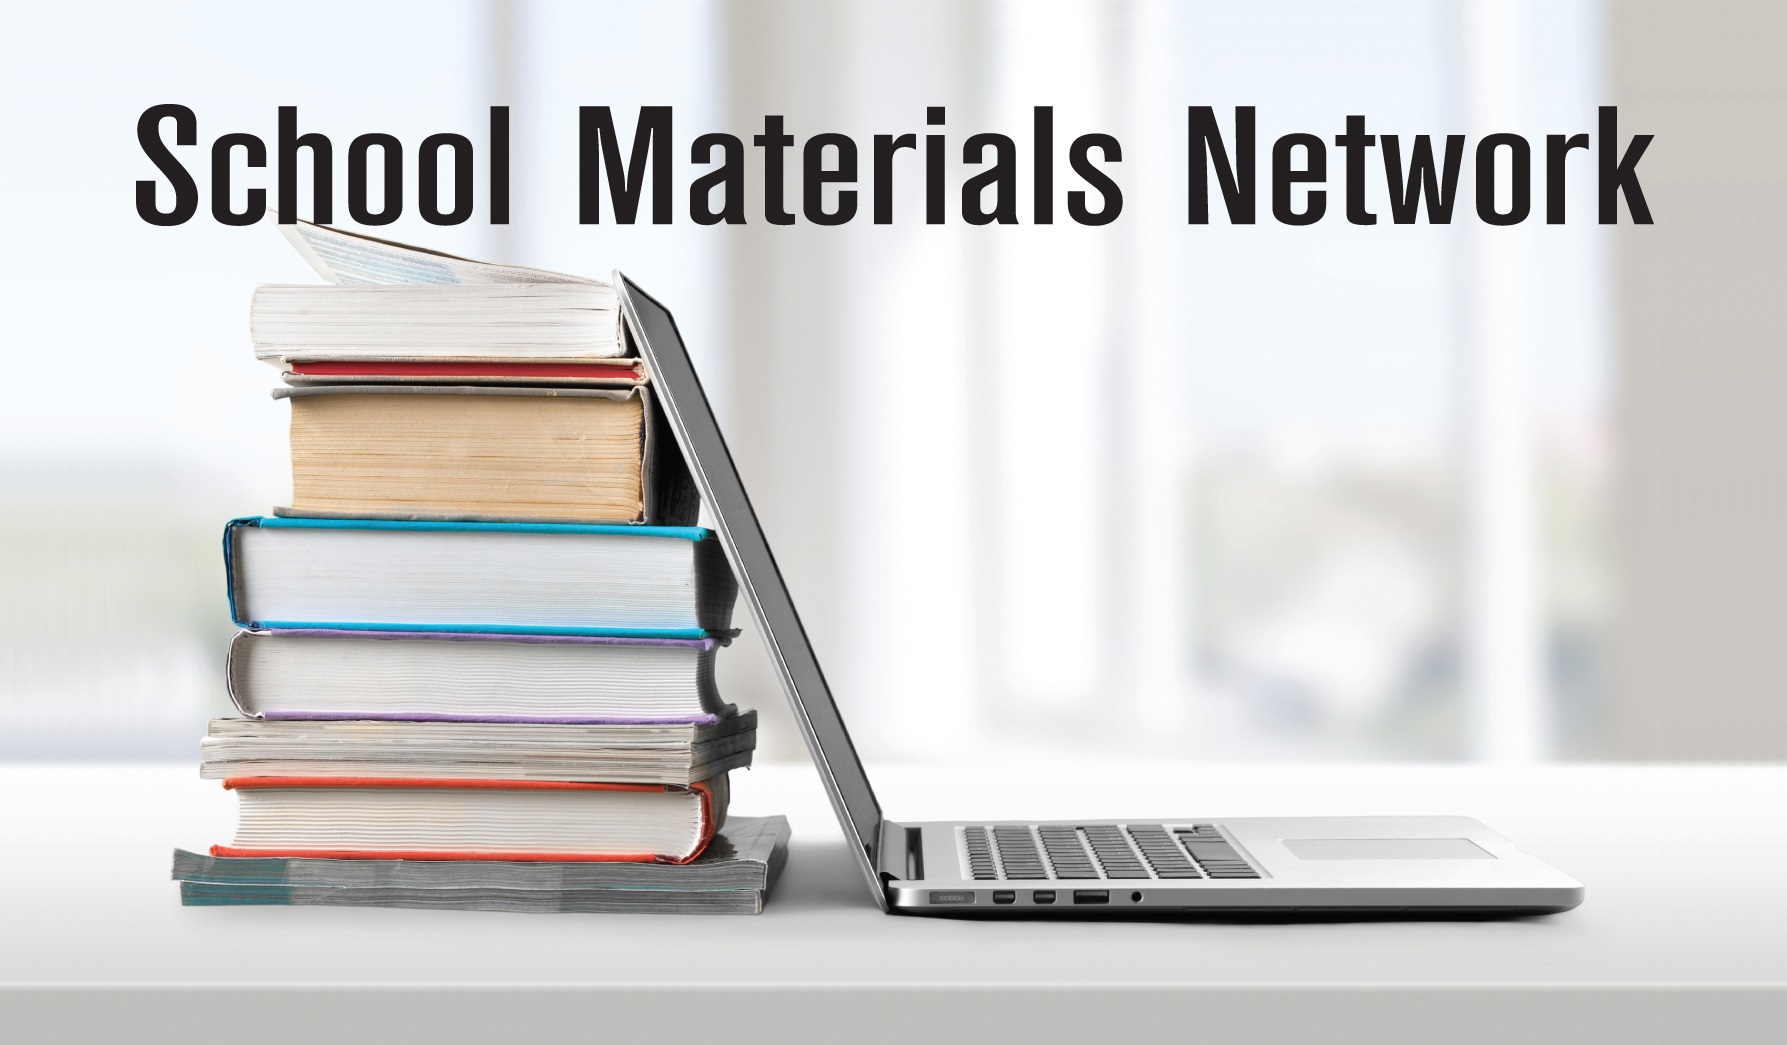 School Materials Network